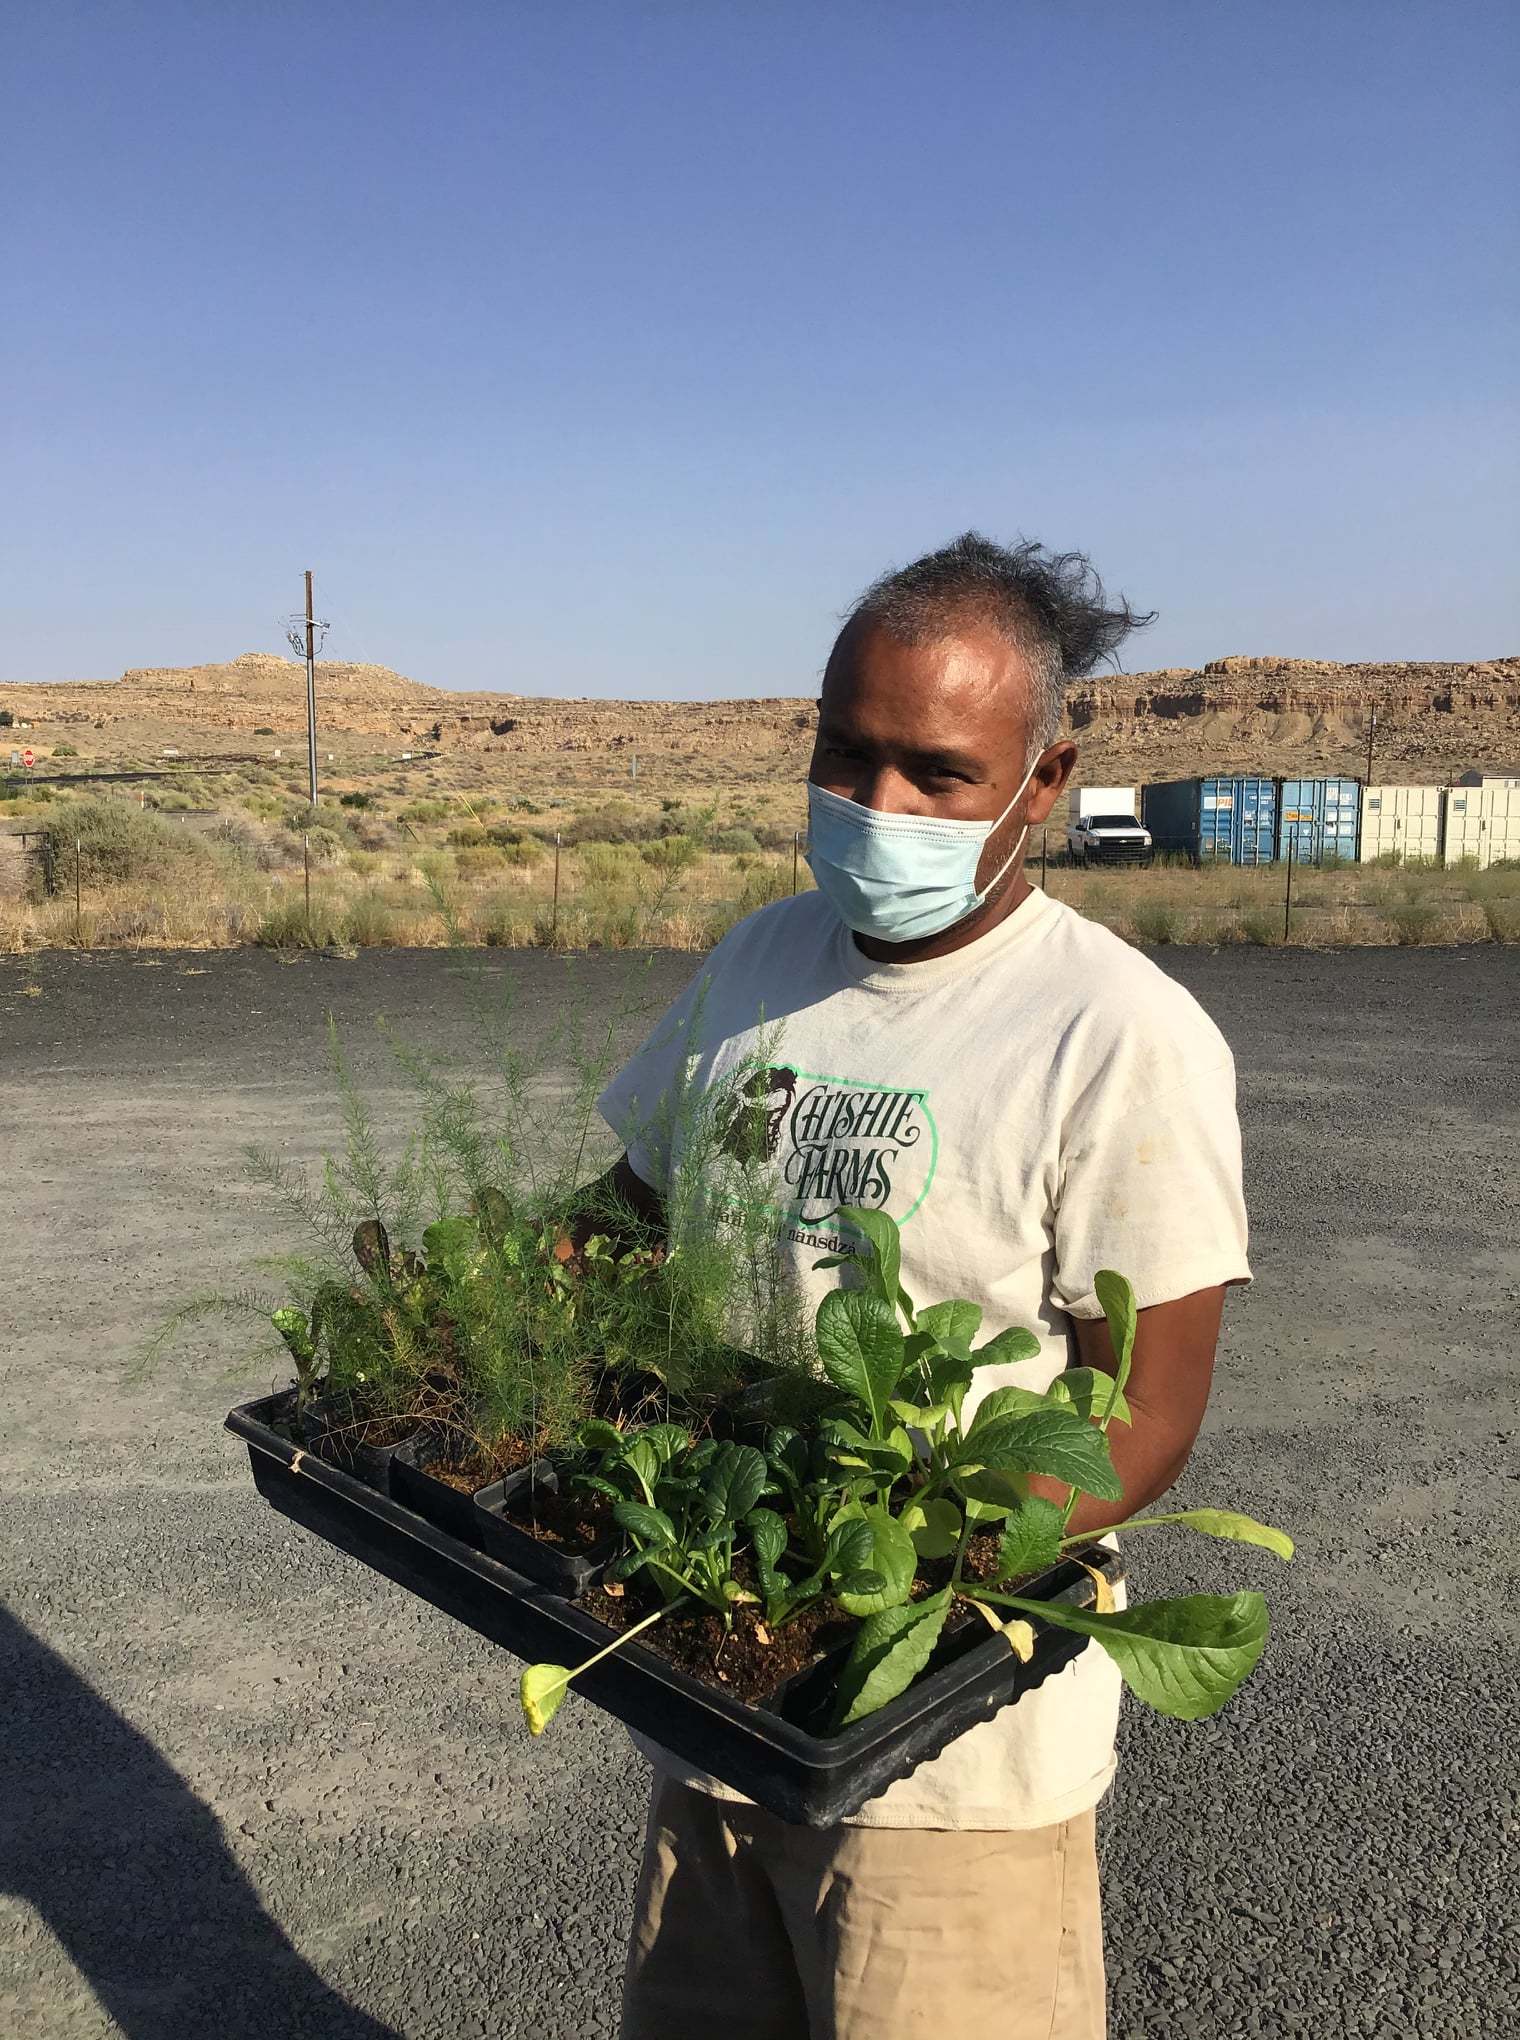 Tyrone Thompson of Ch'ishie Farms displays his bedding plants. February 2021